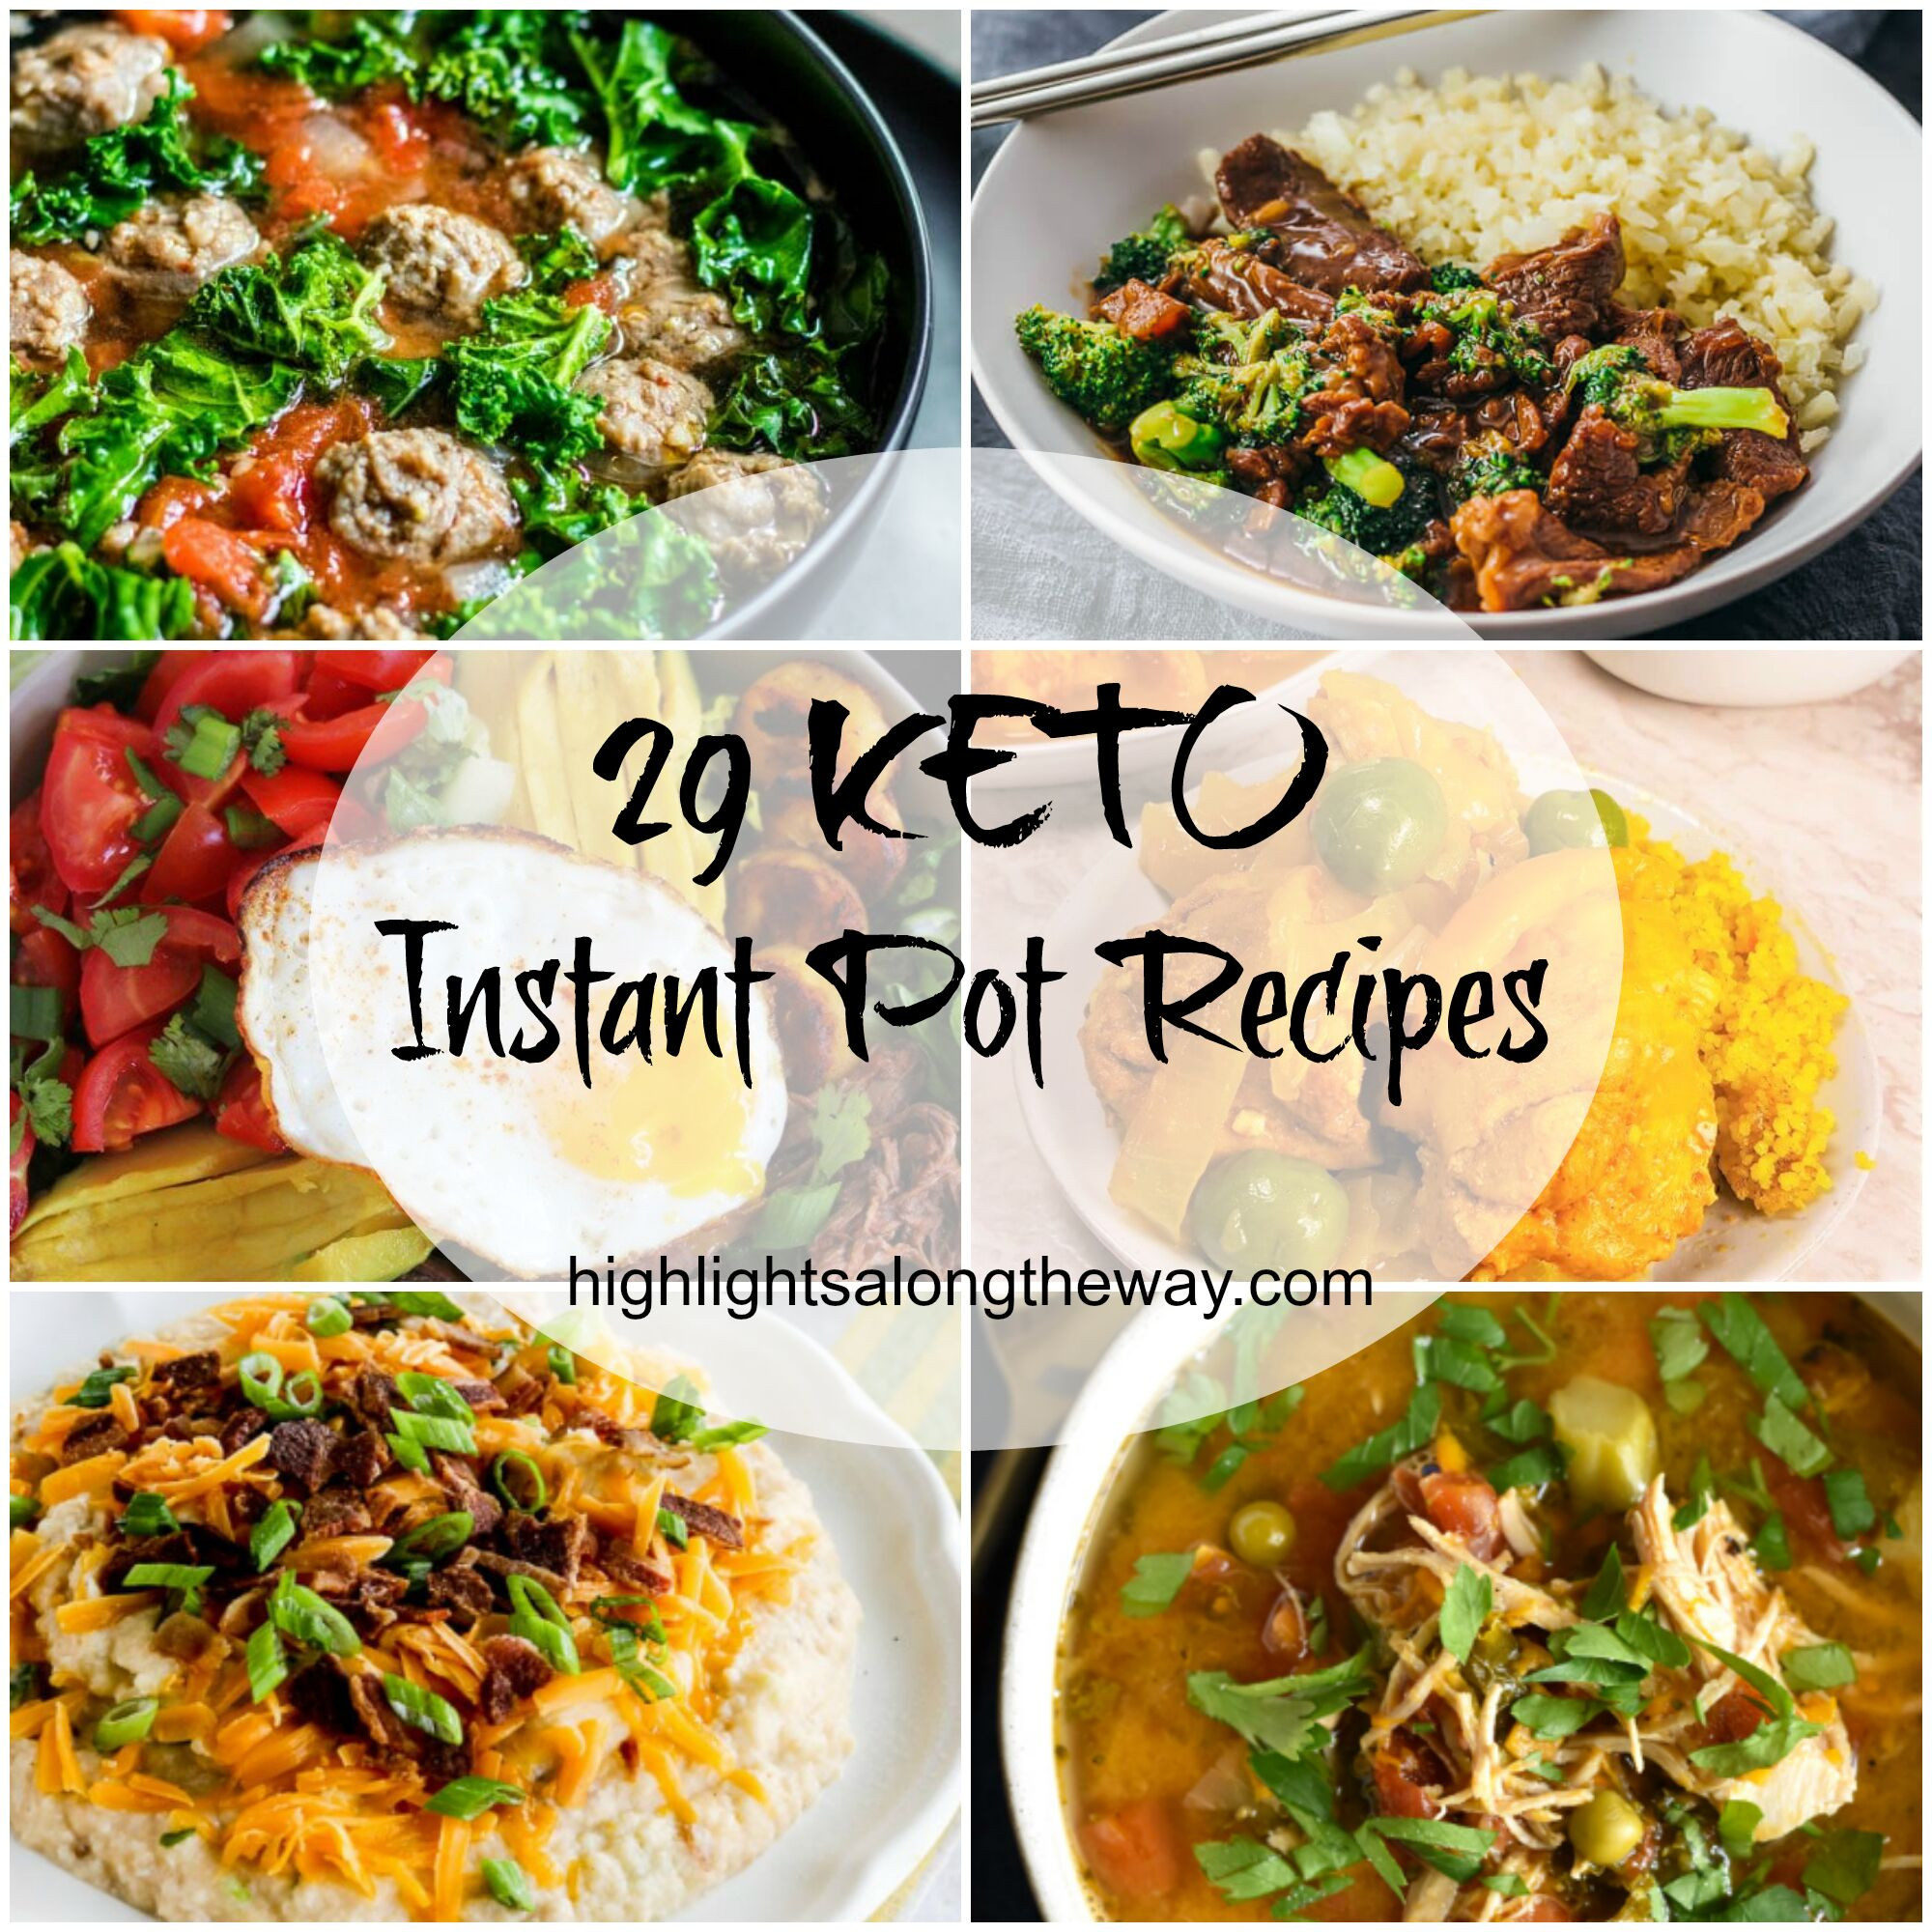 Instapot Keto Recipes Videos
 Easy Keto Instant Pot Recipes Roundup of 29 Easy Keto